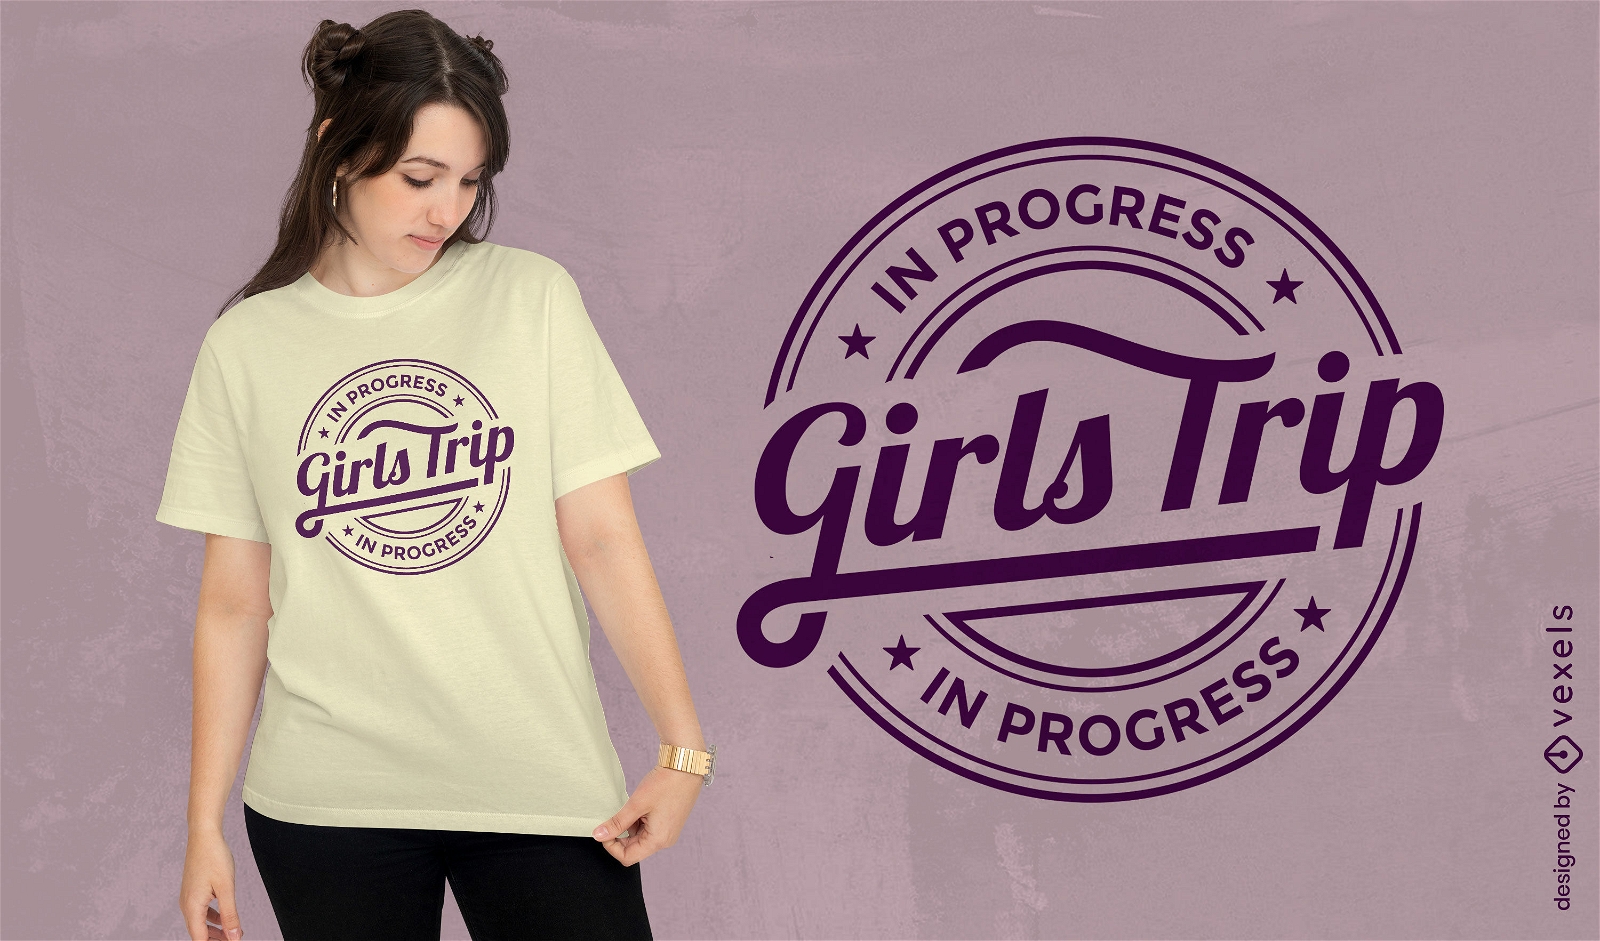 Girls trip quote t-shirt design